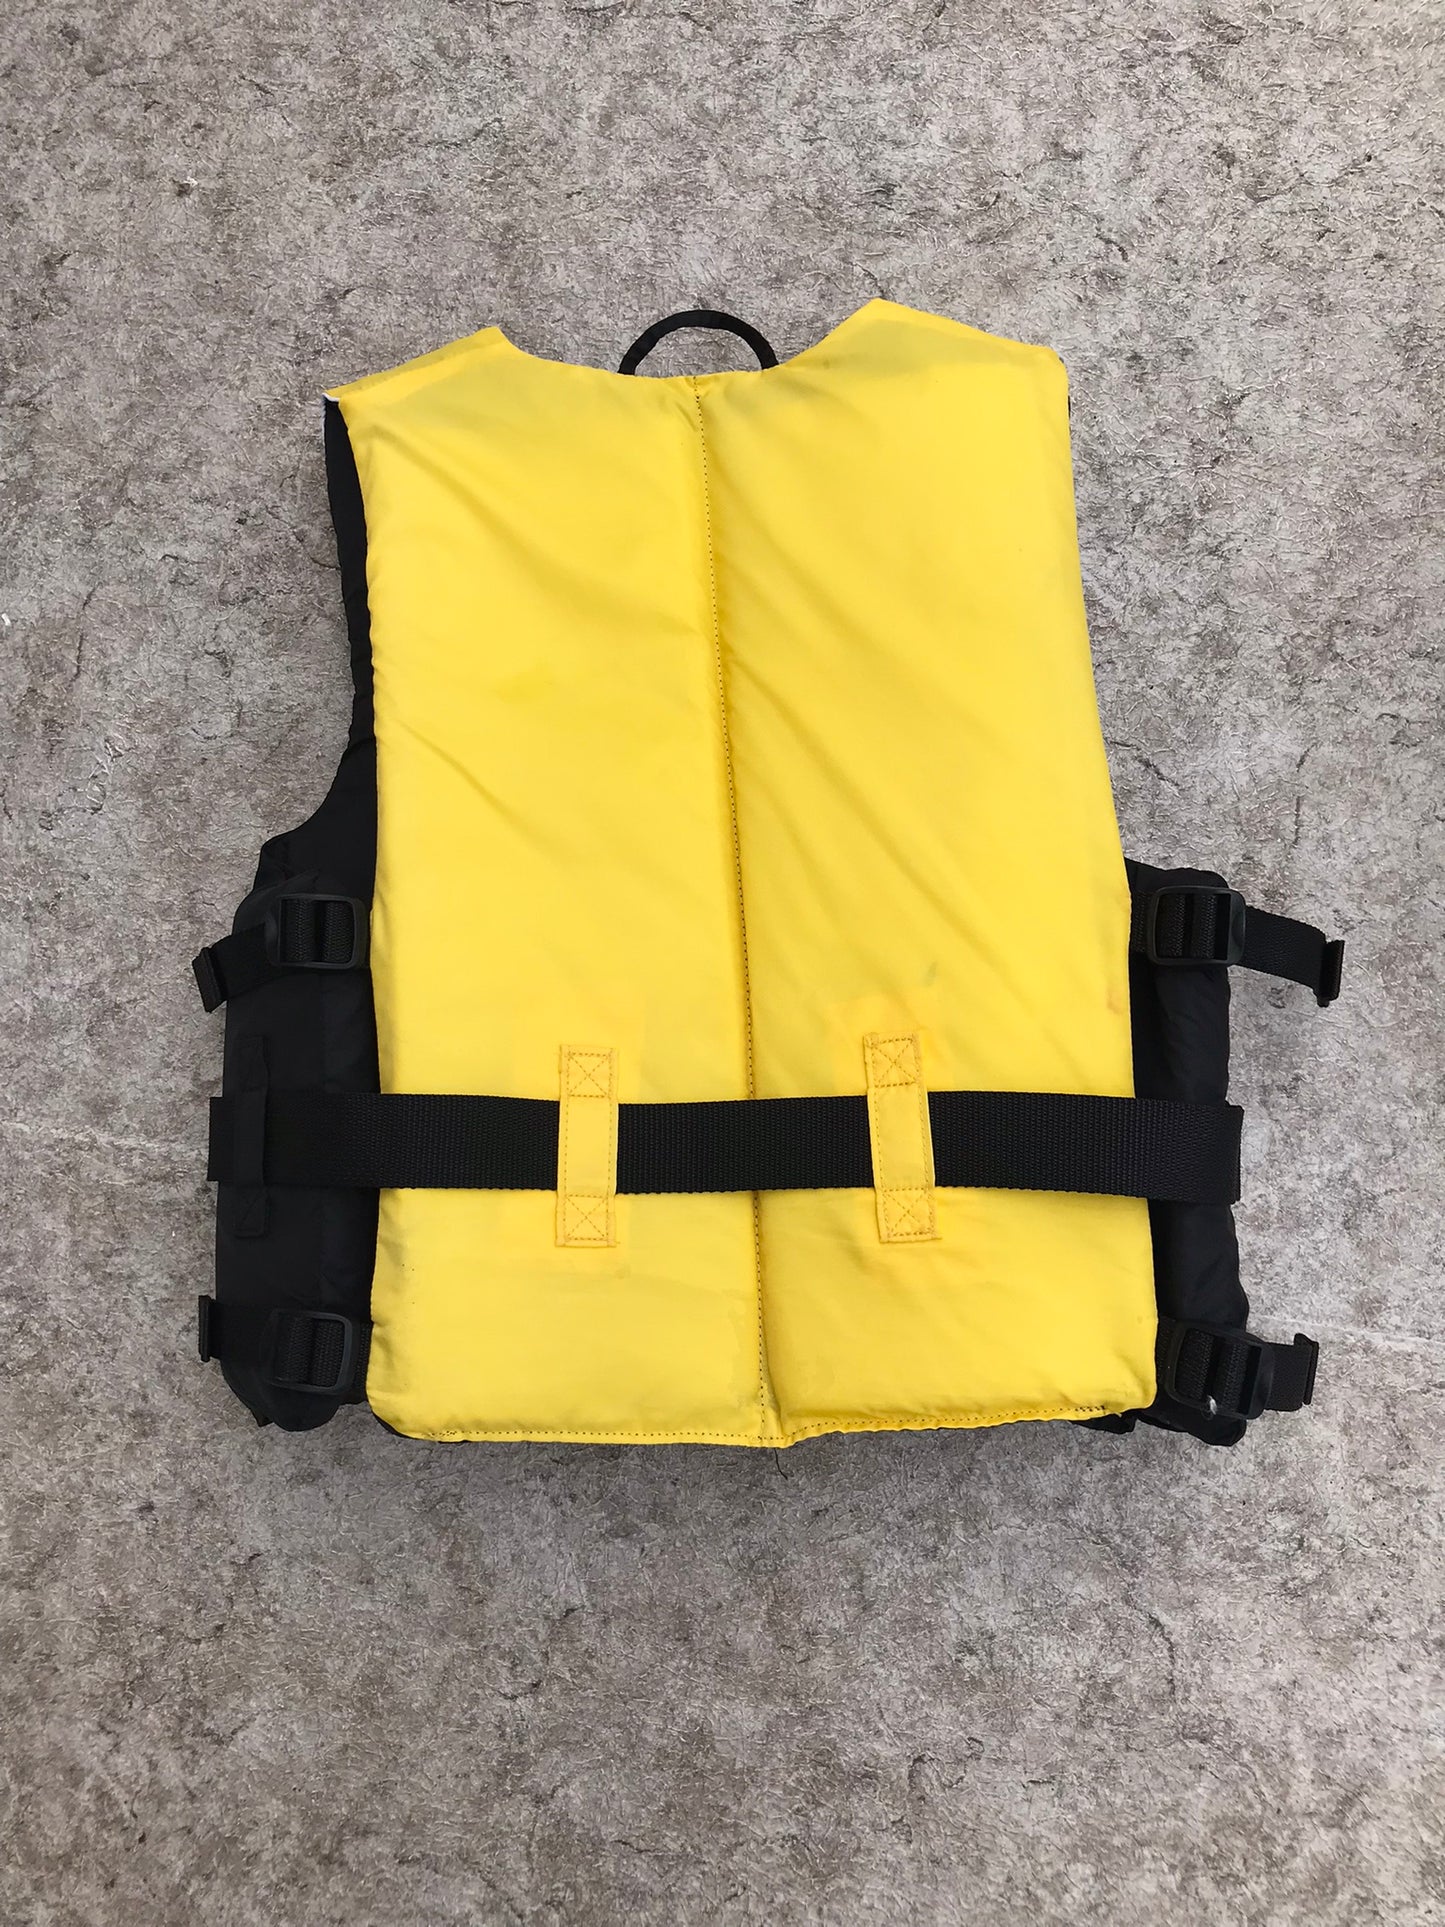 Life Jacket Adult Large Fluid Black Yellow Excellent